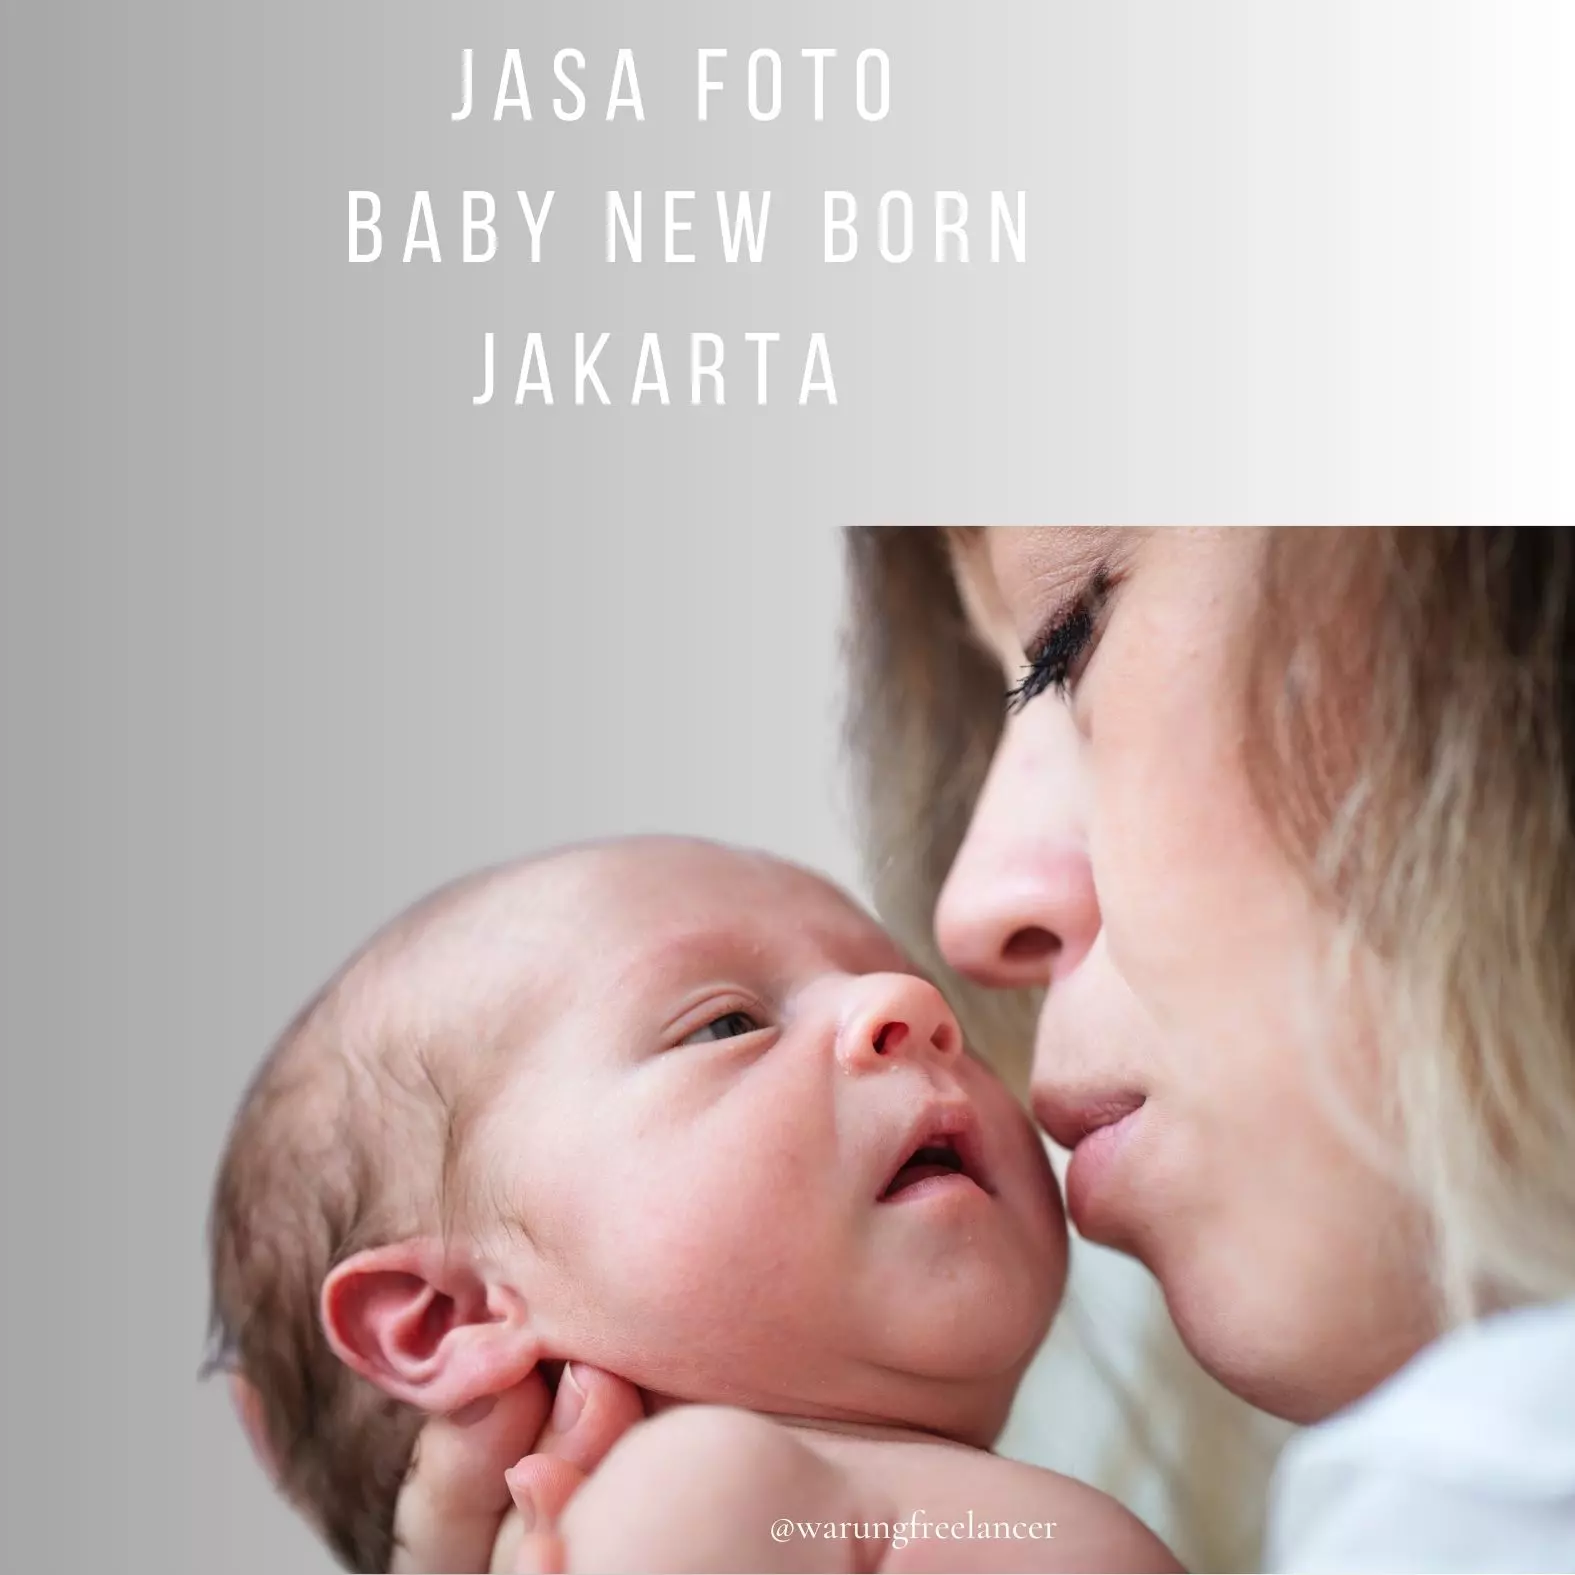 Jasa Foto Baby New Born Jakarta